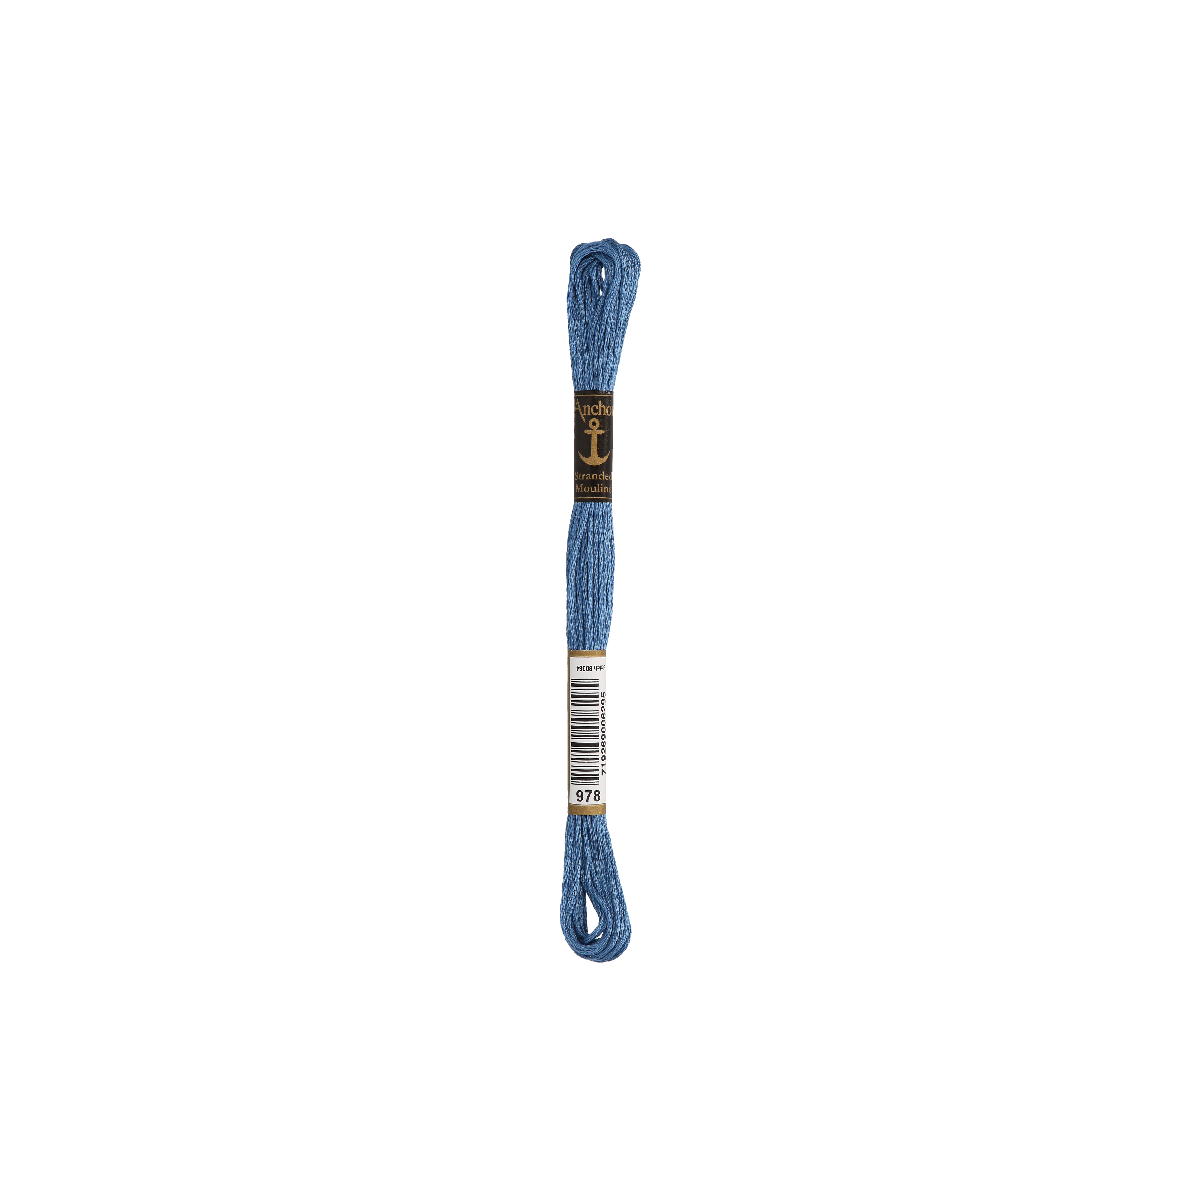 Anchor Sticktwist 8m, acciaio blu, cotone, colore 978, 6...